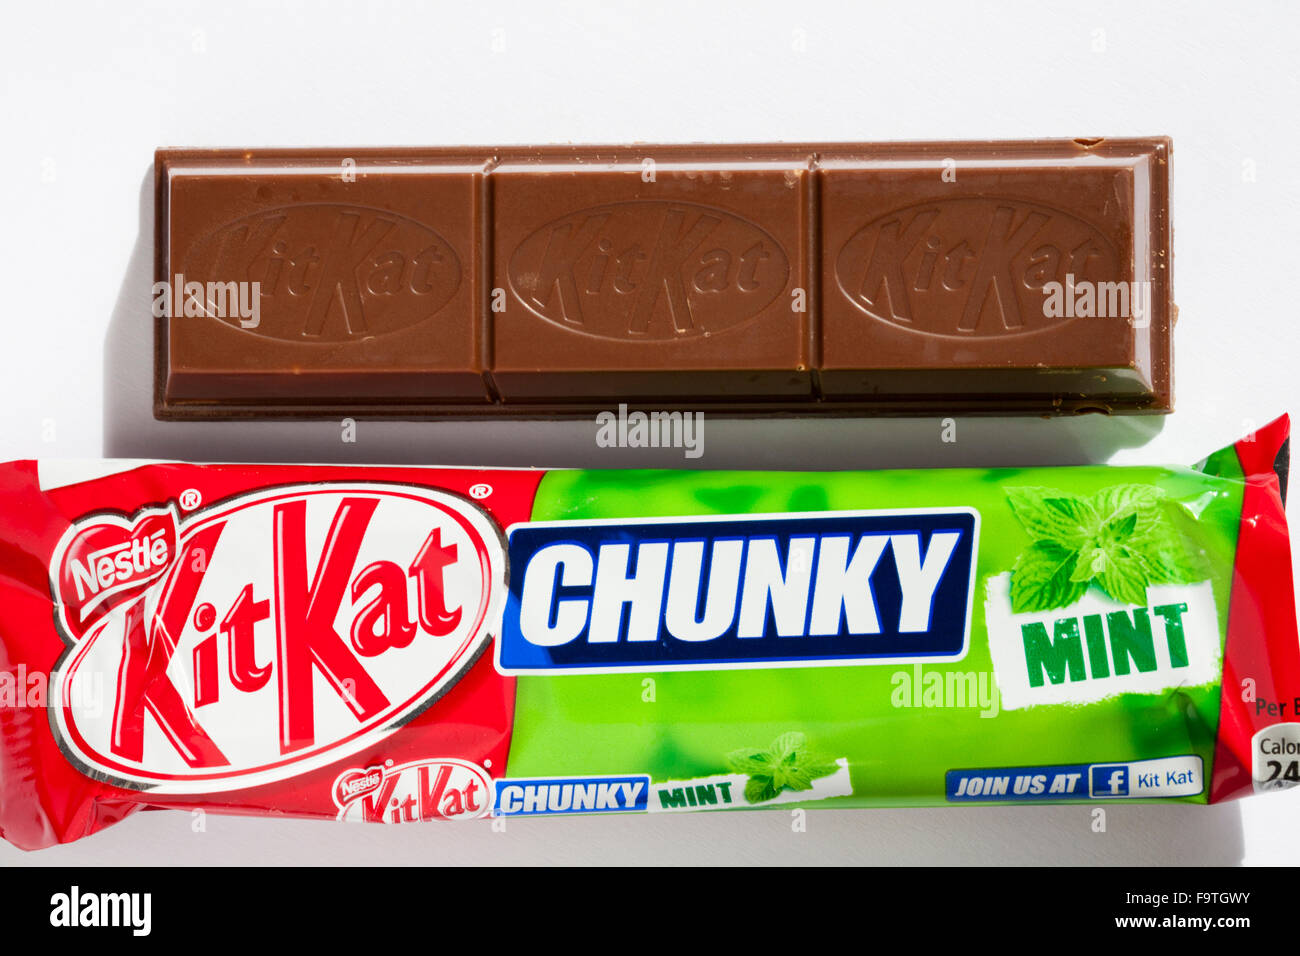 LVIV, UKRAINE - April 08, 2021: Kitkat mini chocolate bar in a wrapper on a  white background Stock Photo